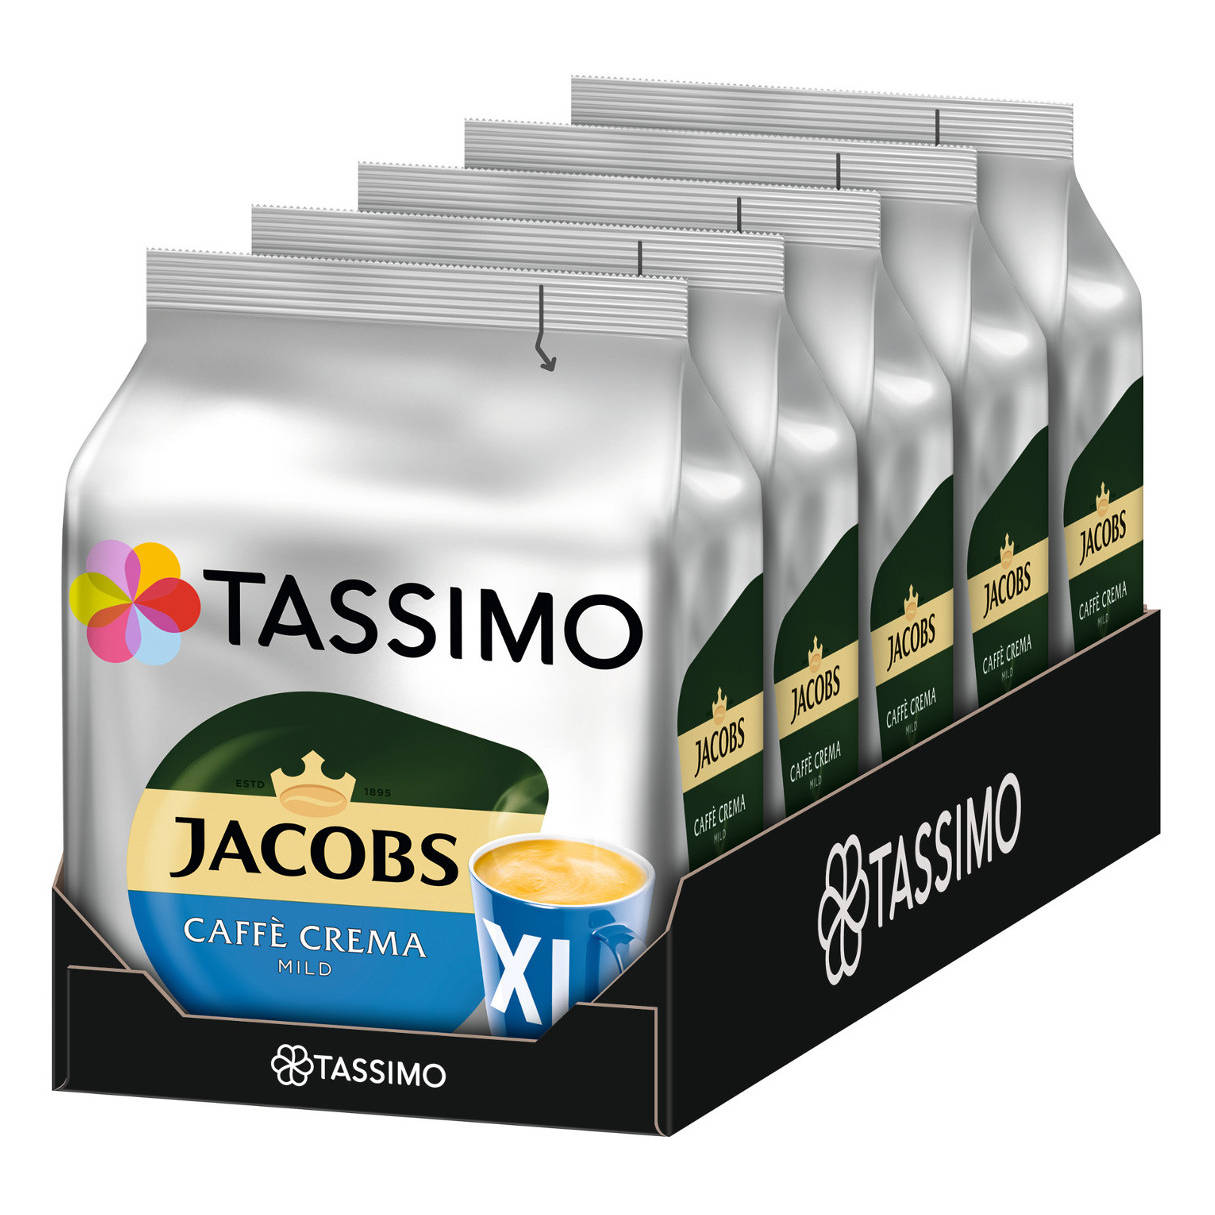 Maschine Caffè XL System)) (Tassimo (T-Disc Getränke Jacobs Crema Mild 5 16 TASSIMO T x Kaffeekapseln Discs